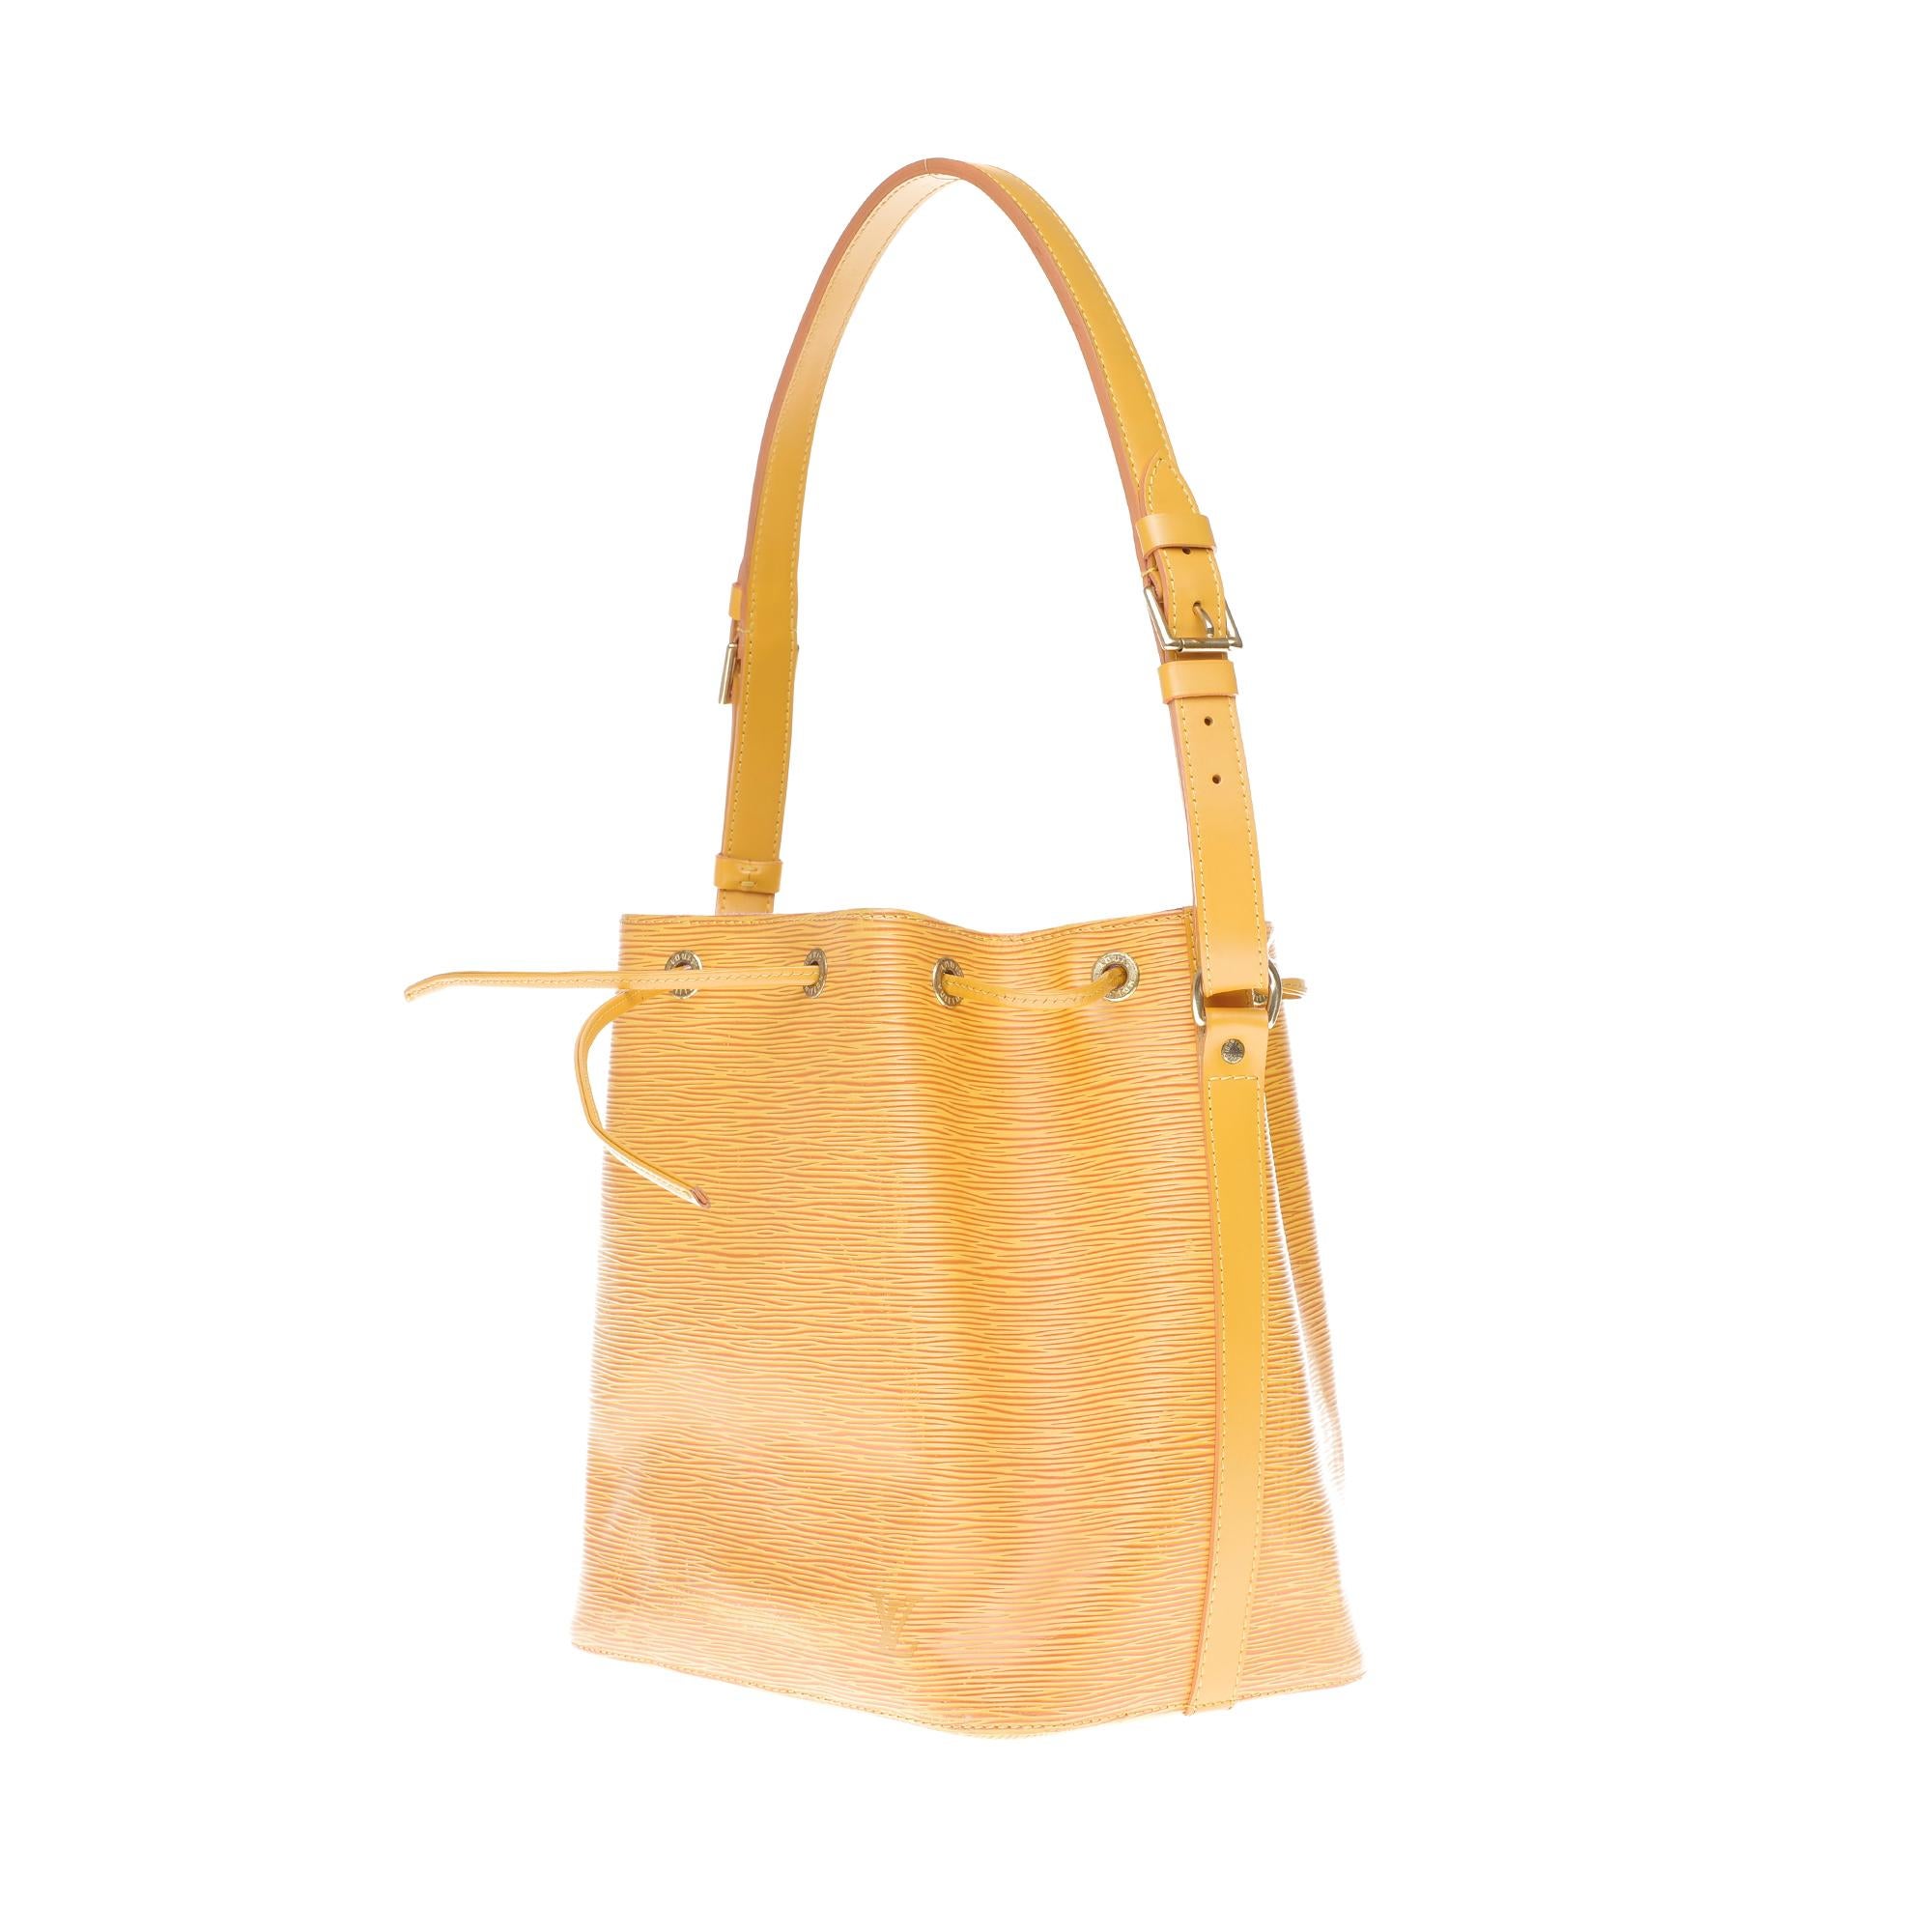 Orange Louis Vuitton Noé PM shoulder bag in yellow epi leather, gold hardware